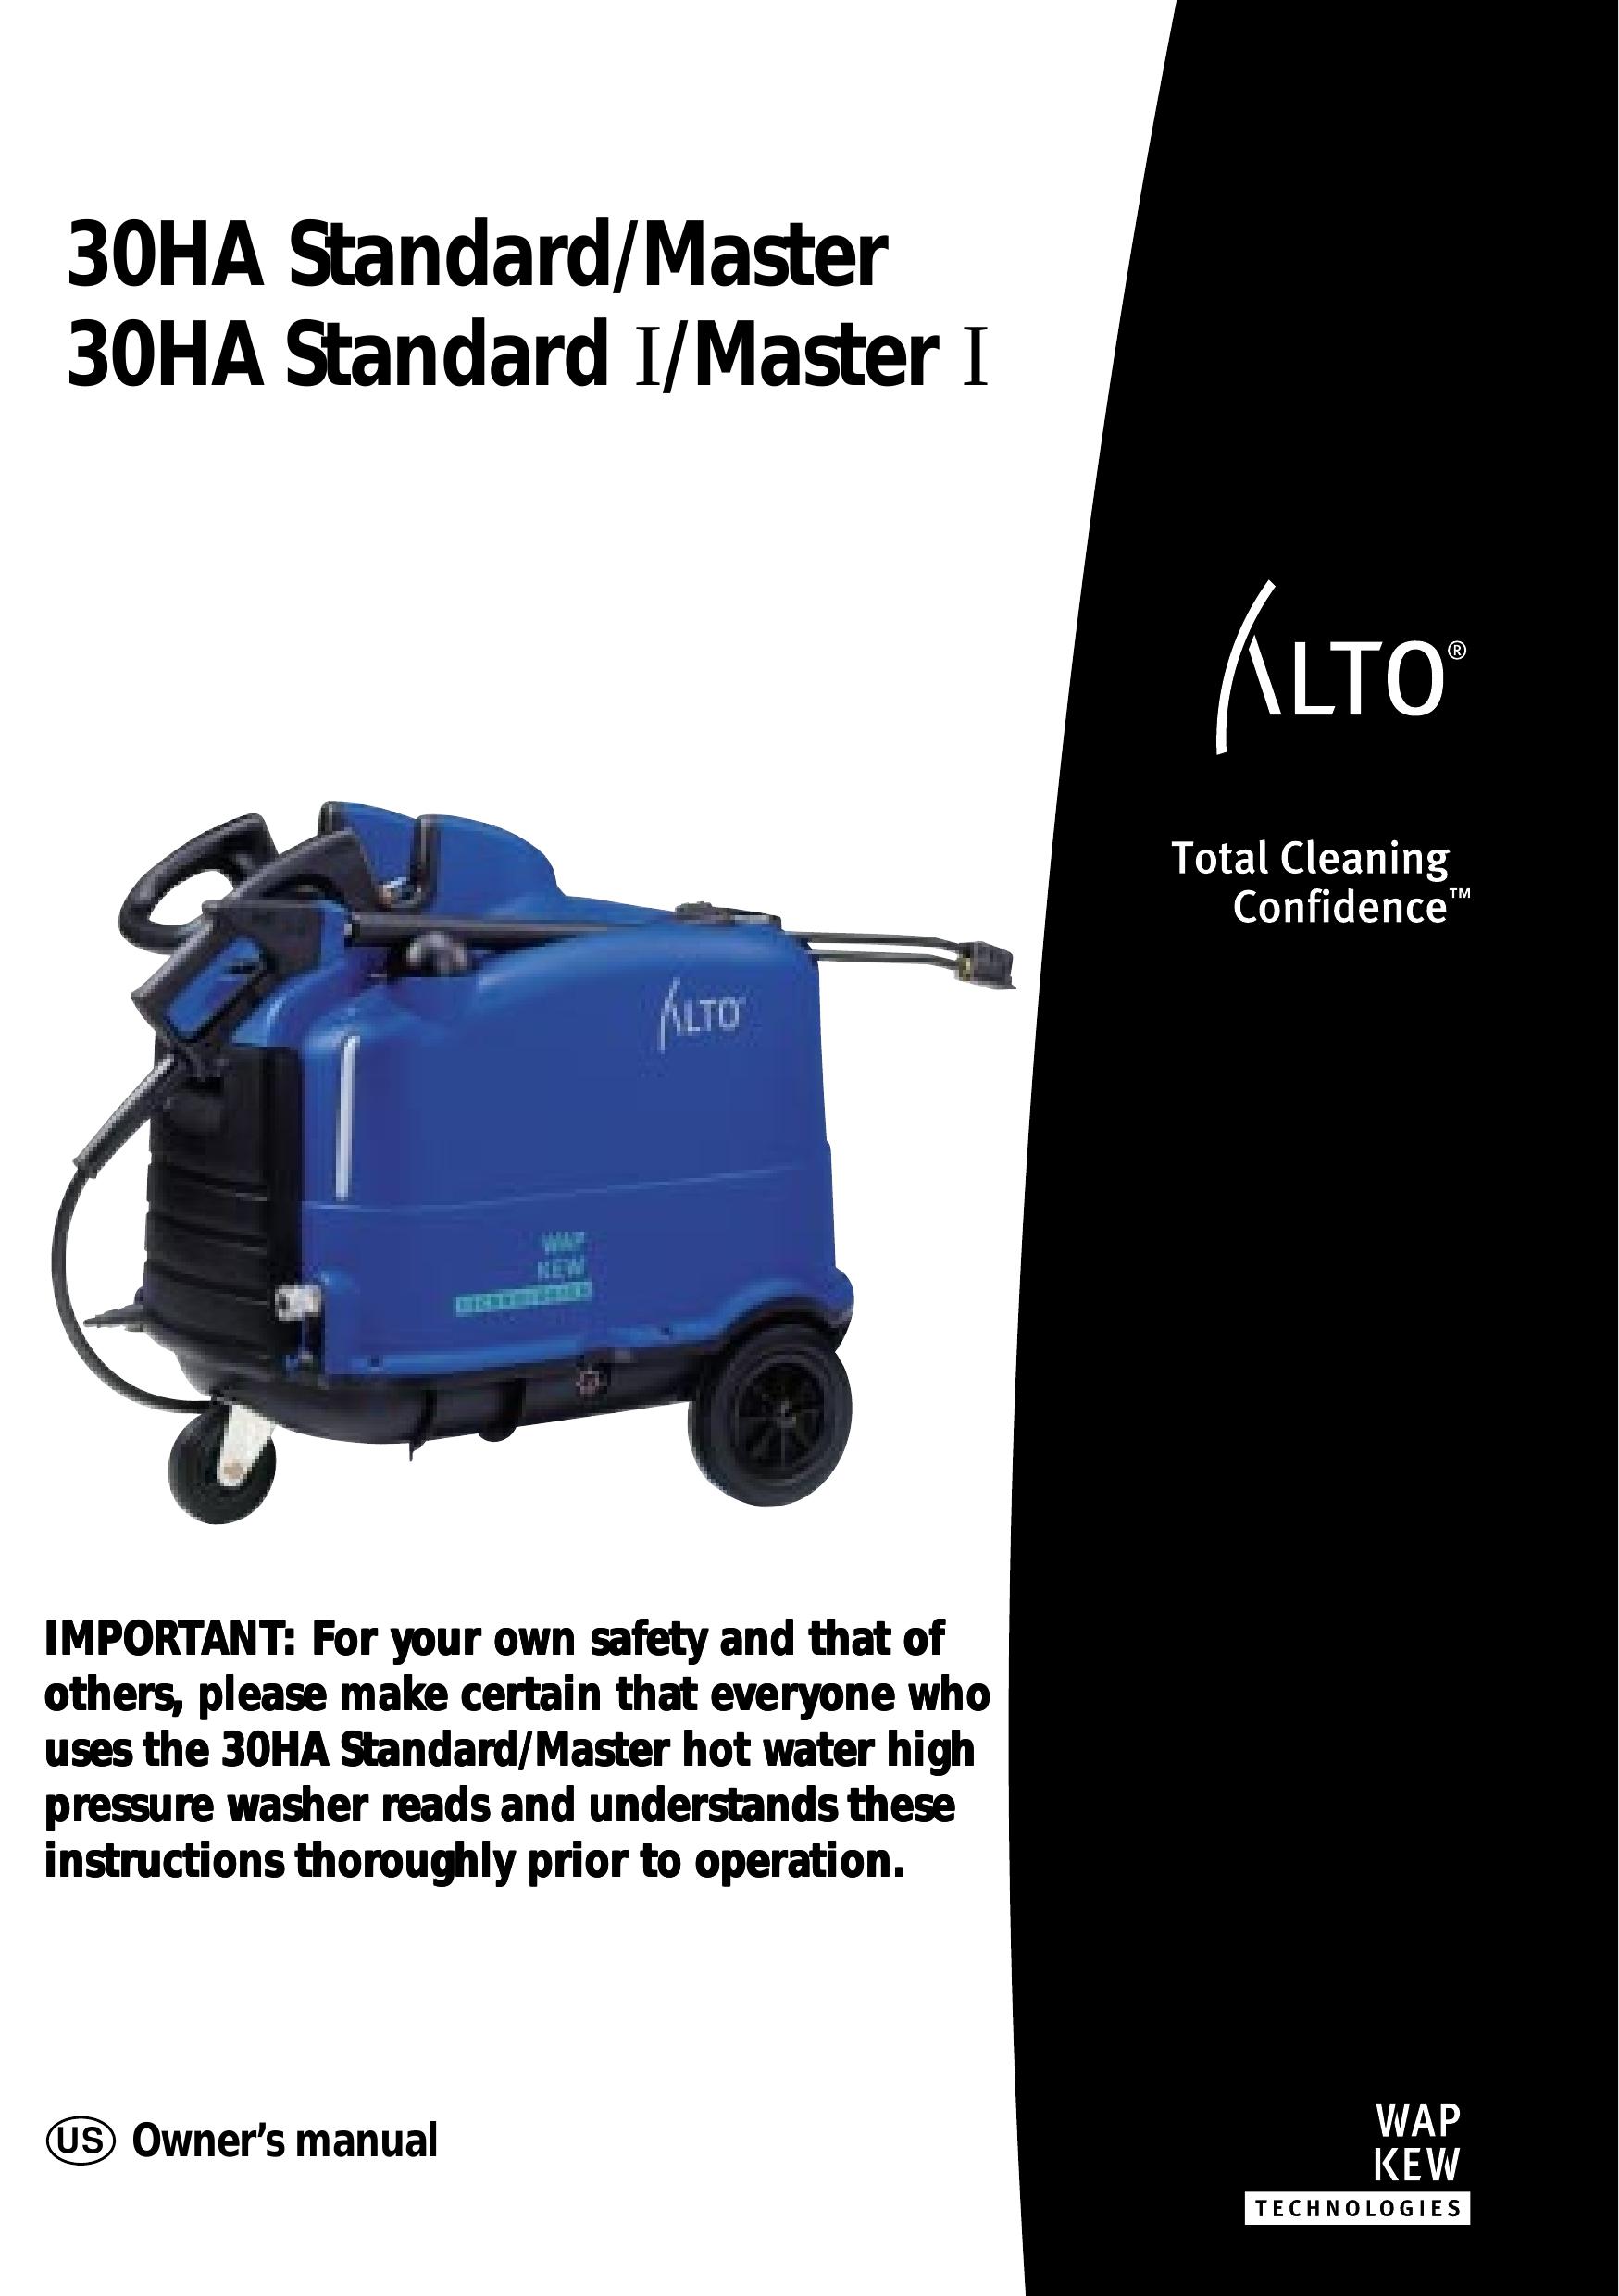 Alto-Shaam 30HA STANDARD/MASTER Pressure Washer User Manual